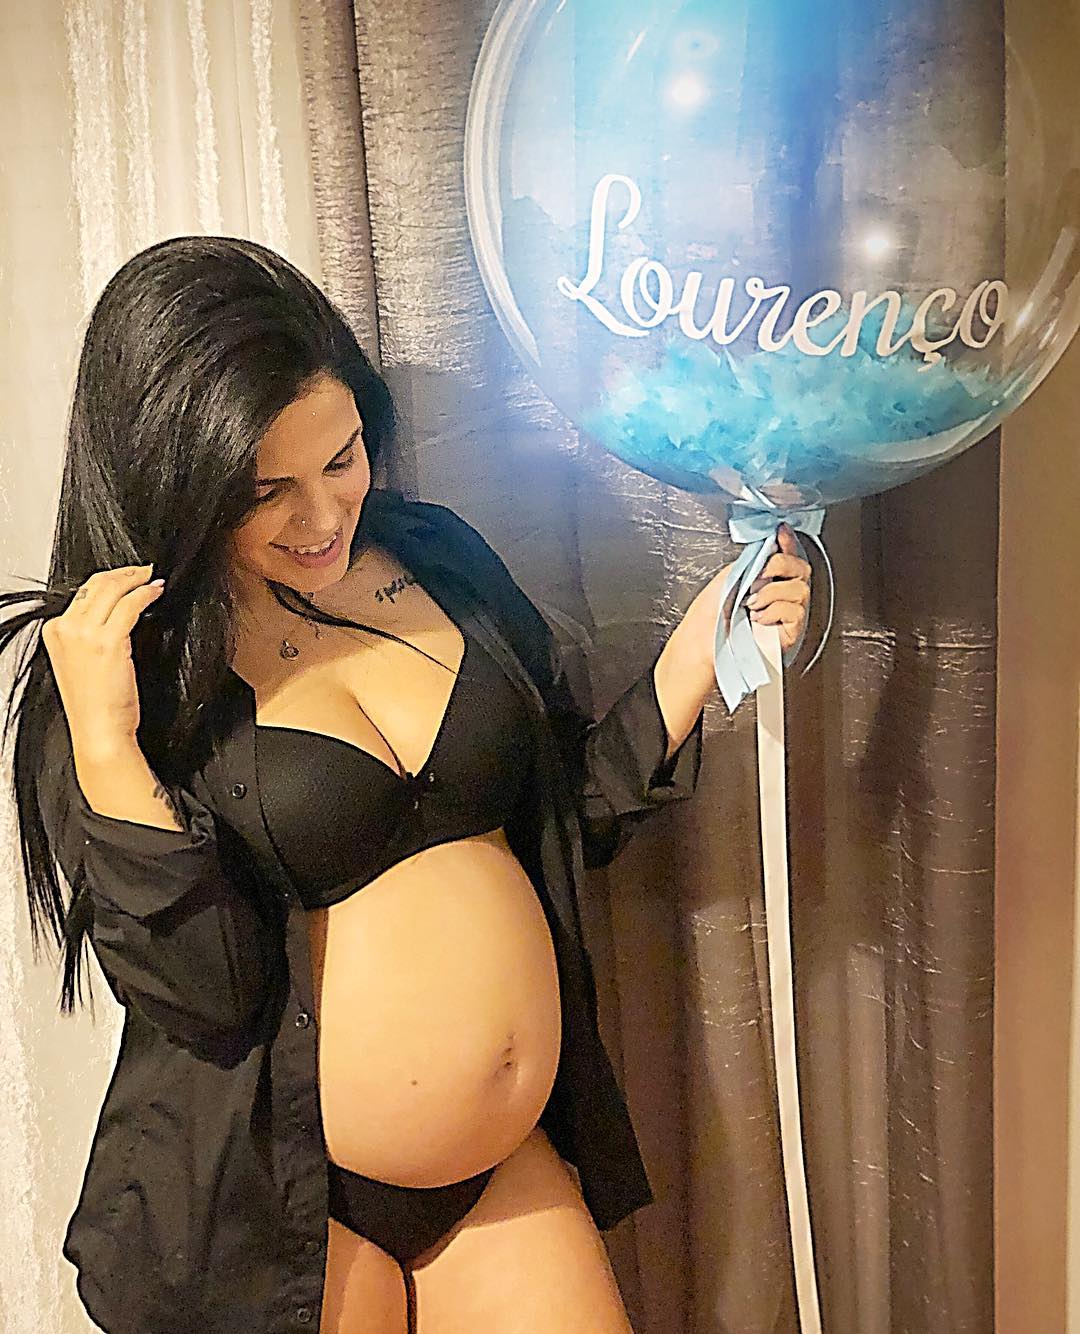 tatiana boa nova Aos 8 meses de gravidez, Tatiana Boa Nova mostra barrigão